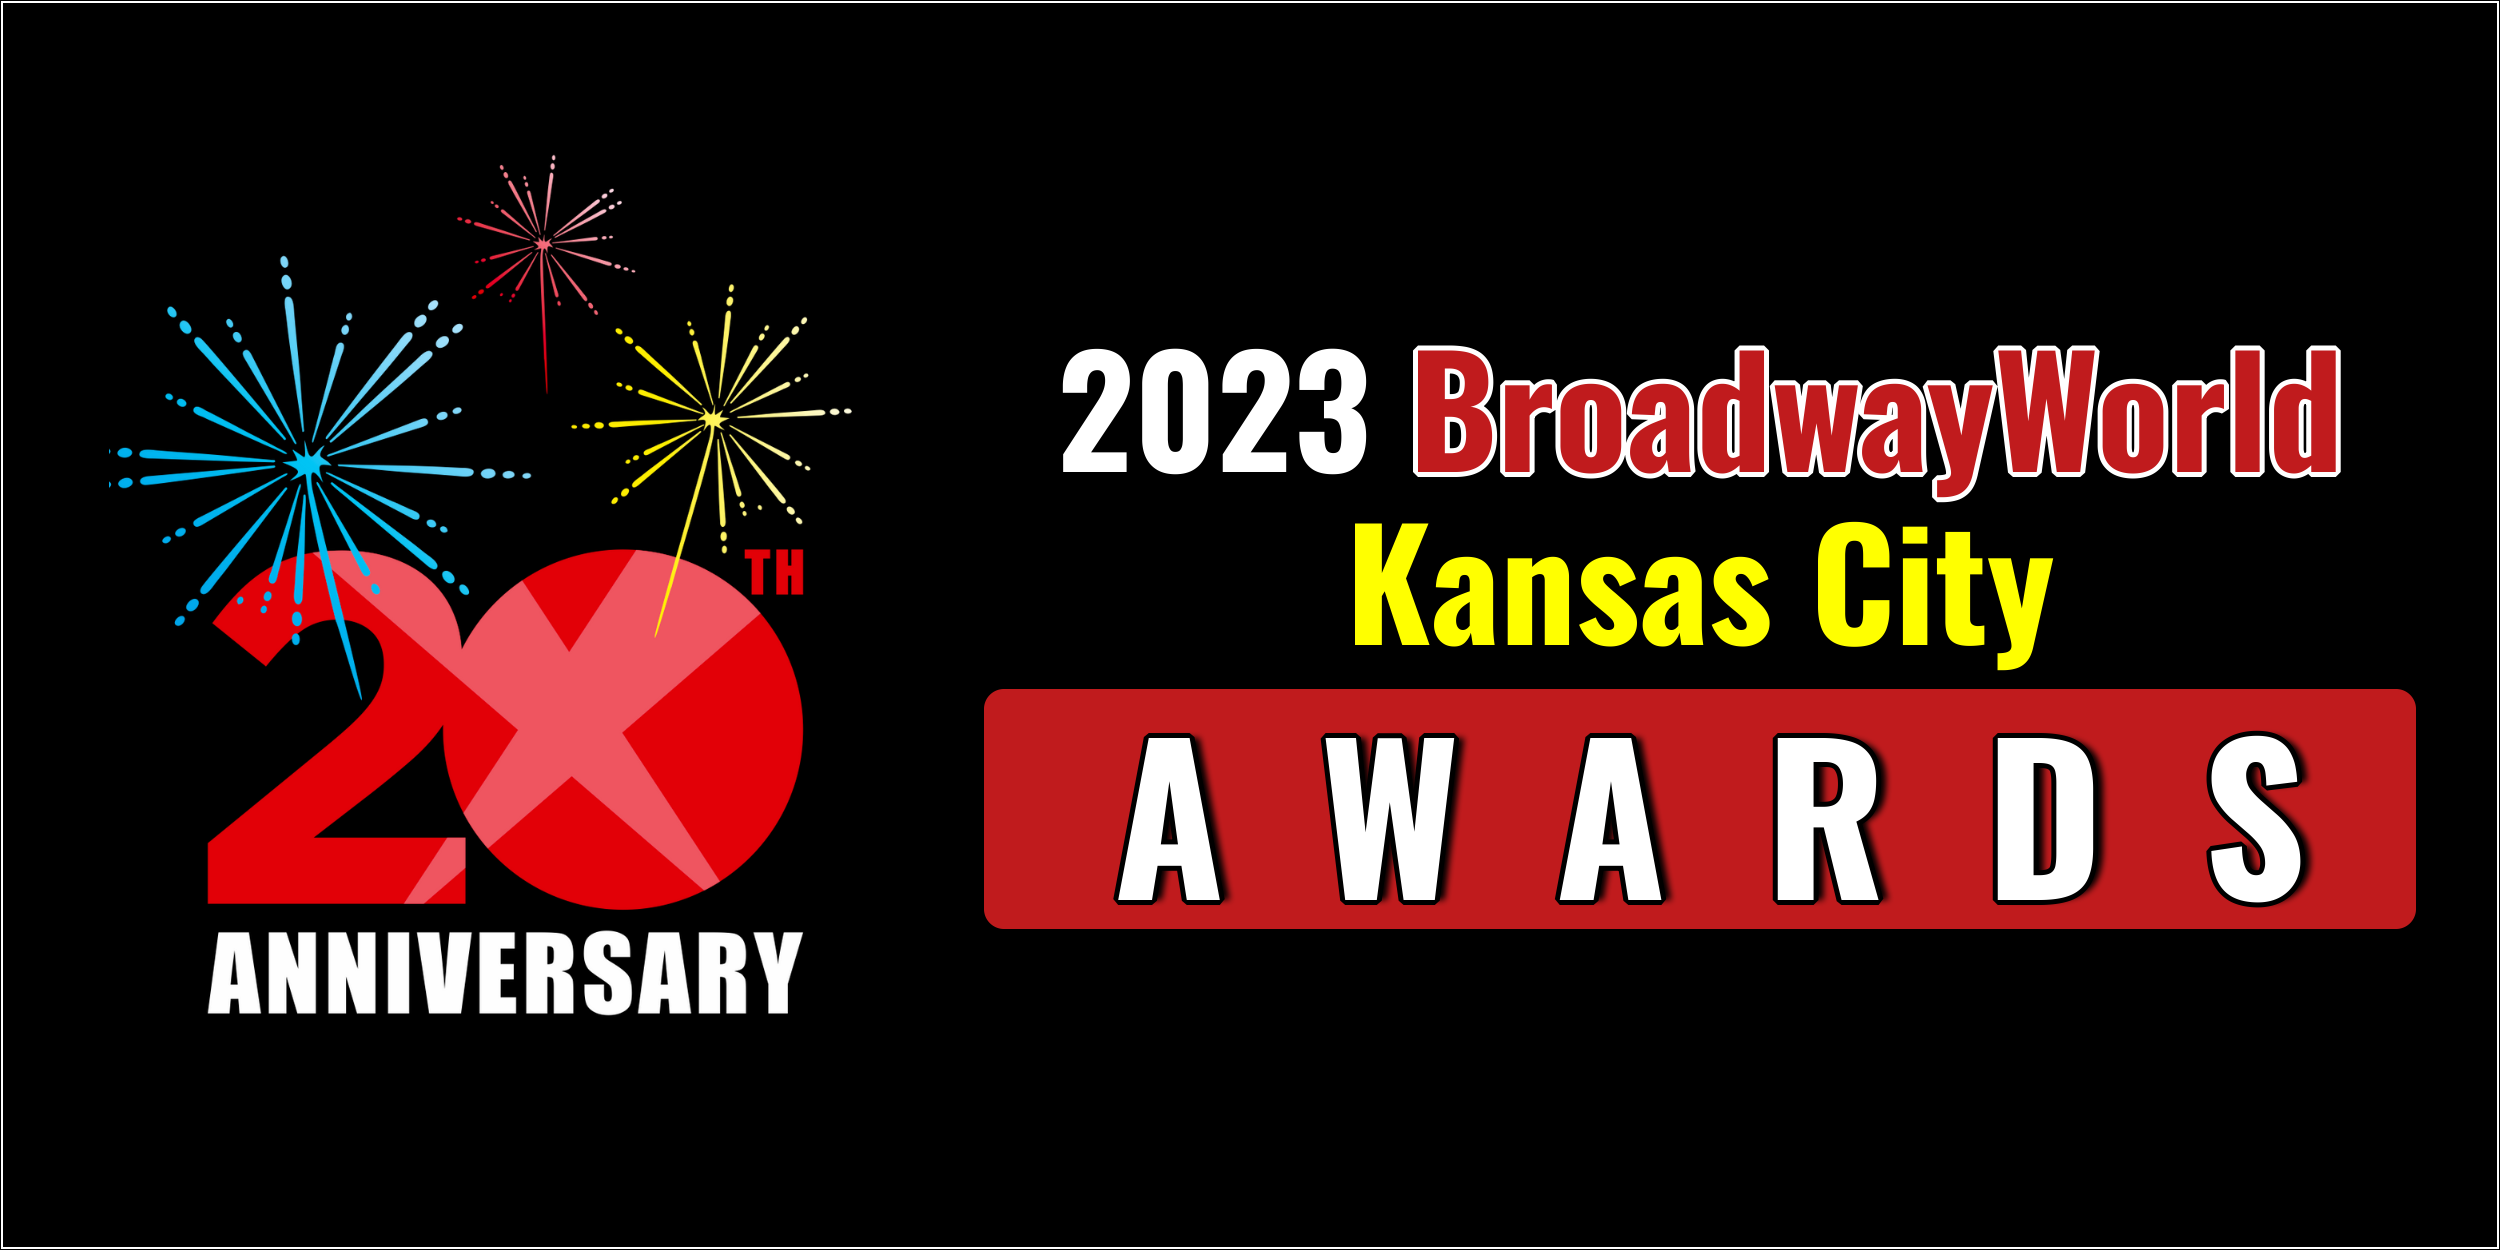 BroadwayWorld Kansas City Awards December 5th Standings;  Leads Favorite Local Theatre! 